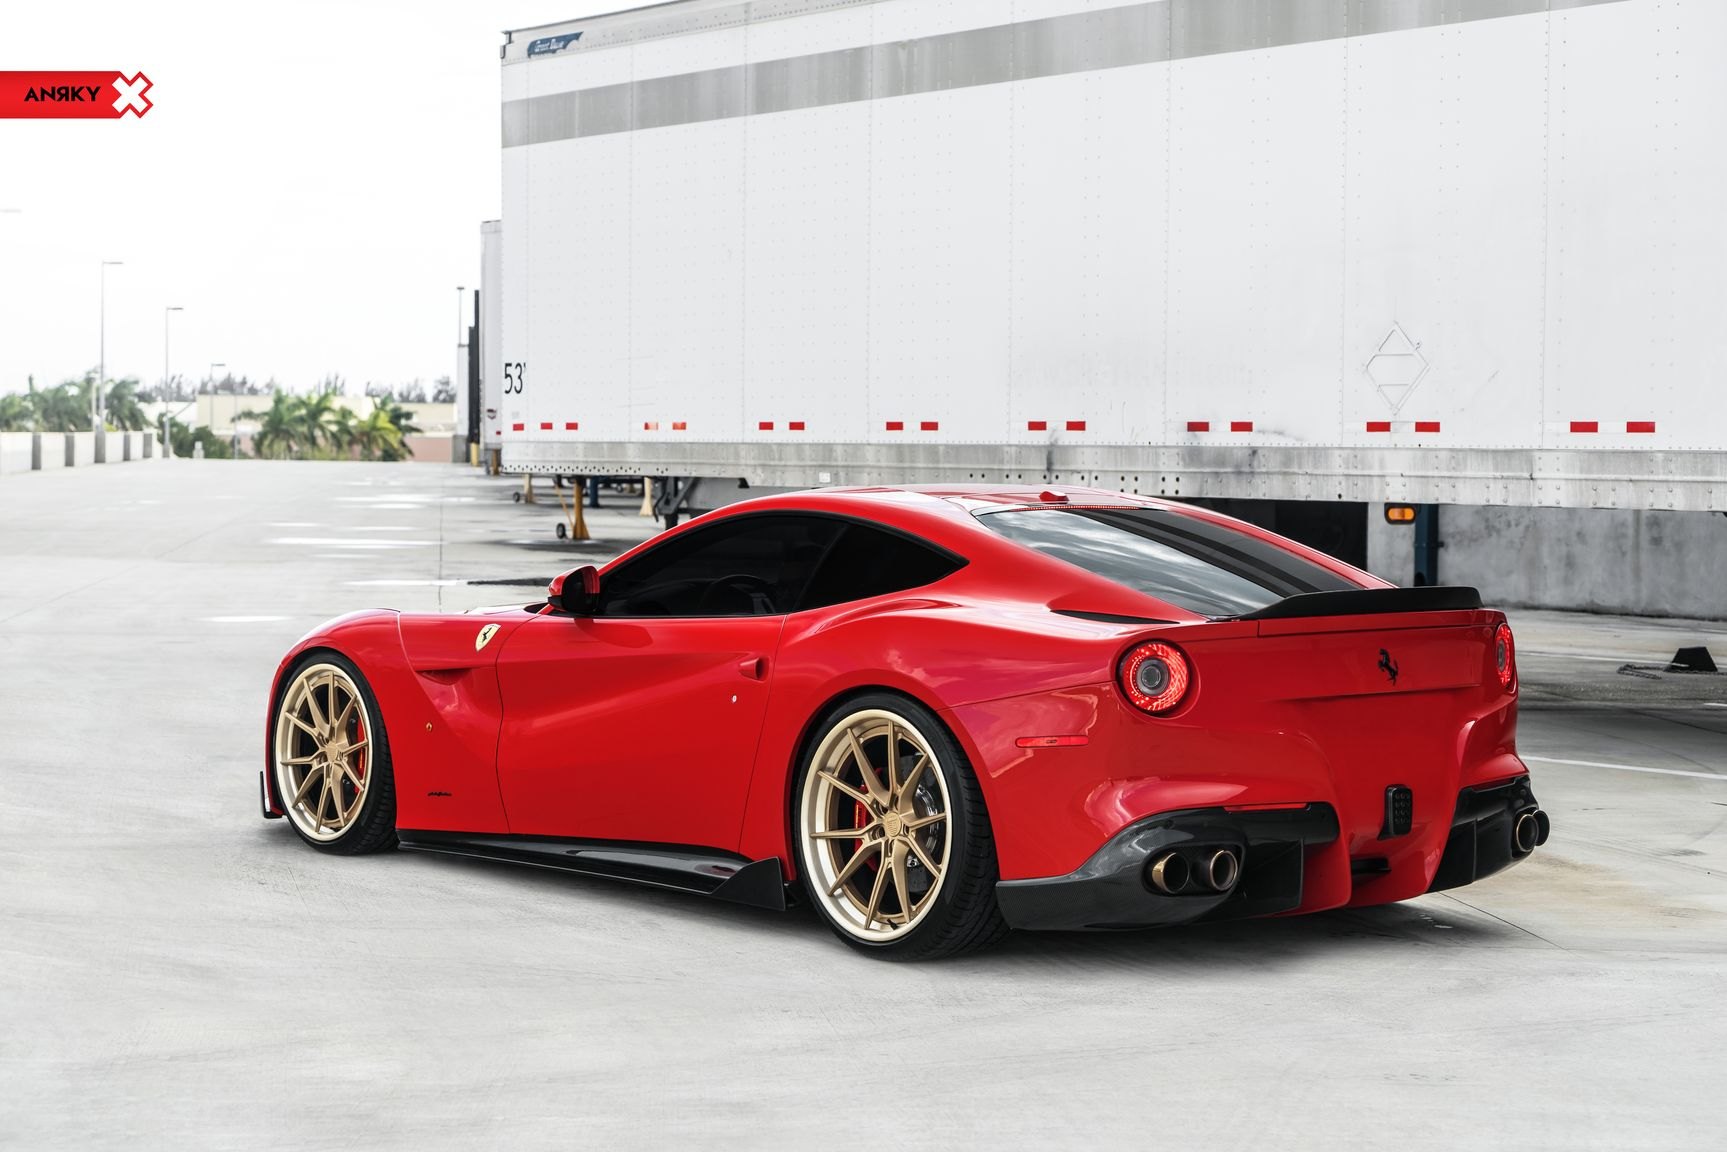 Custom Style Rear Spoiler on Red Ferrari F12 - Photo by Anrky Wheels